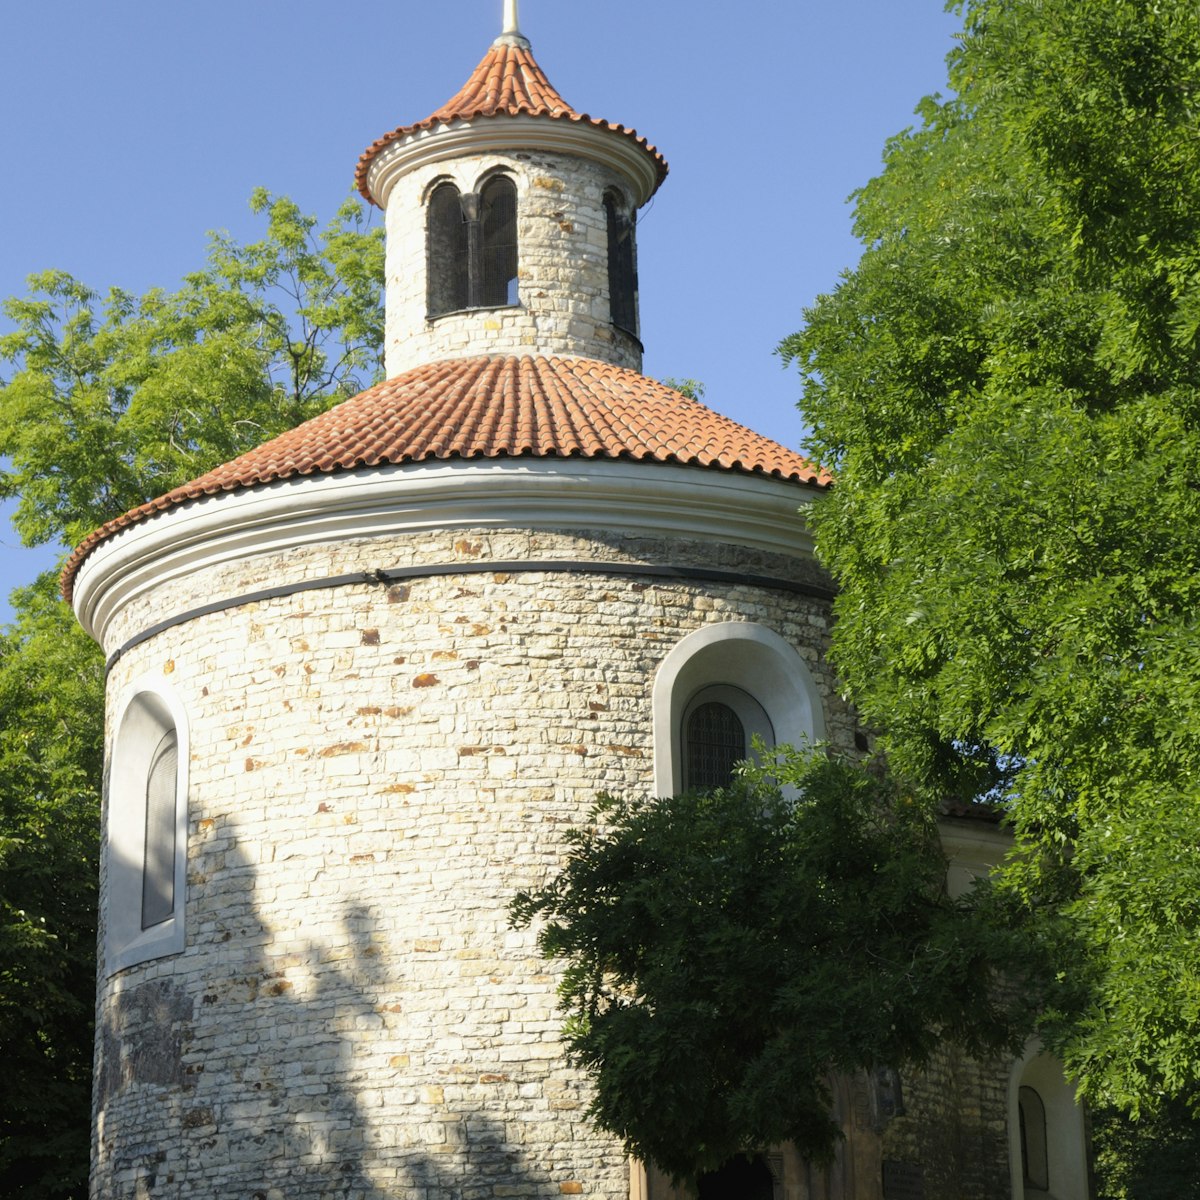 Visitors in front of Romanesque Rotunda of St Martin, V pevnosti, Vysehrad.